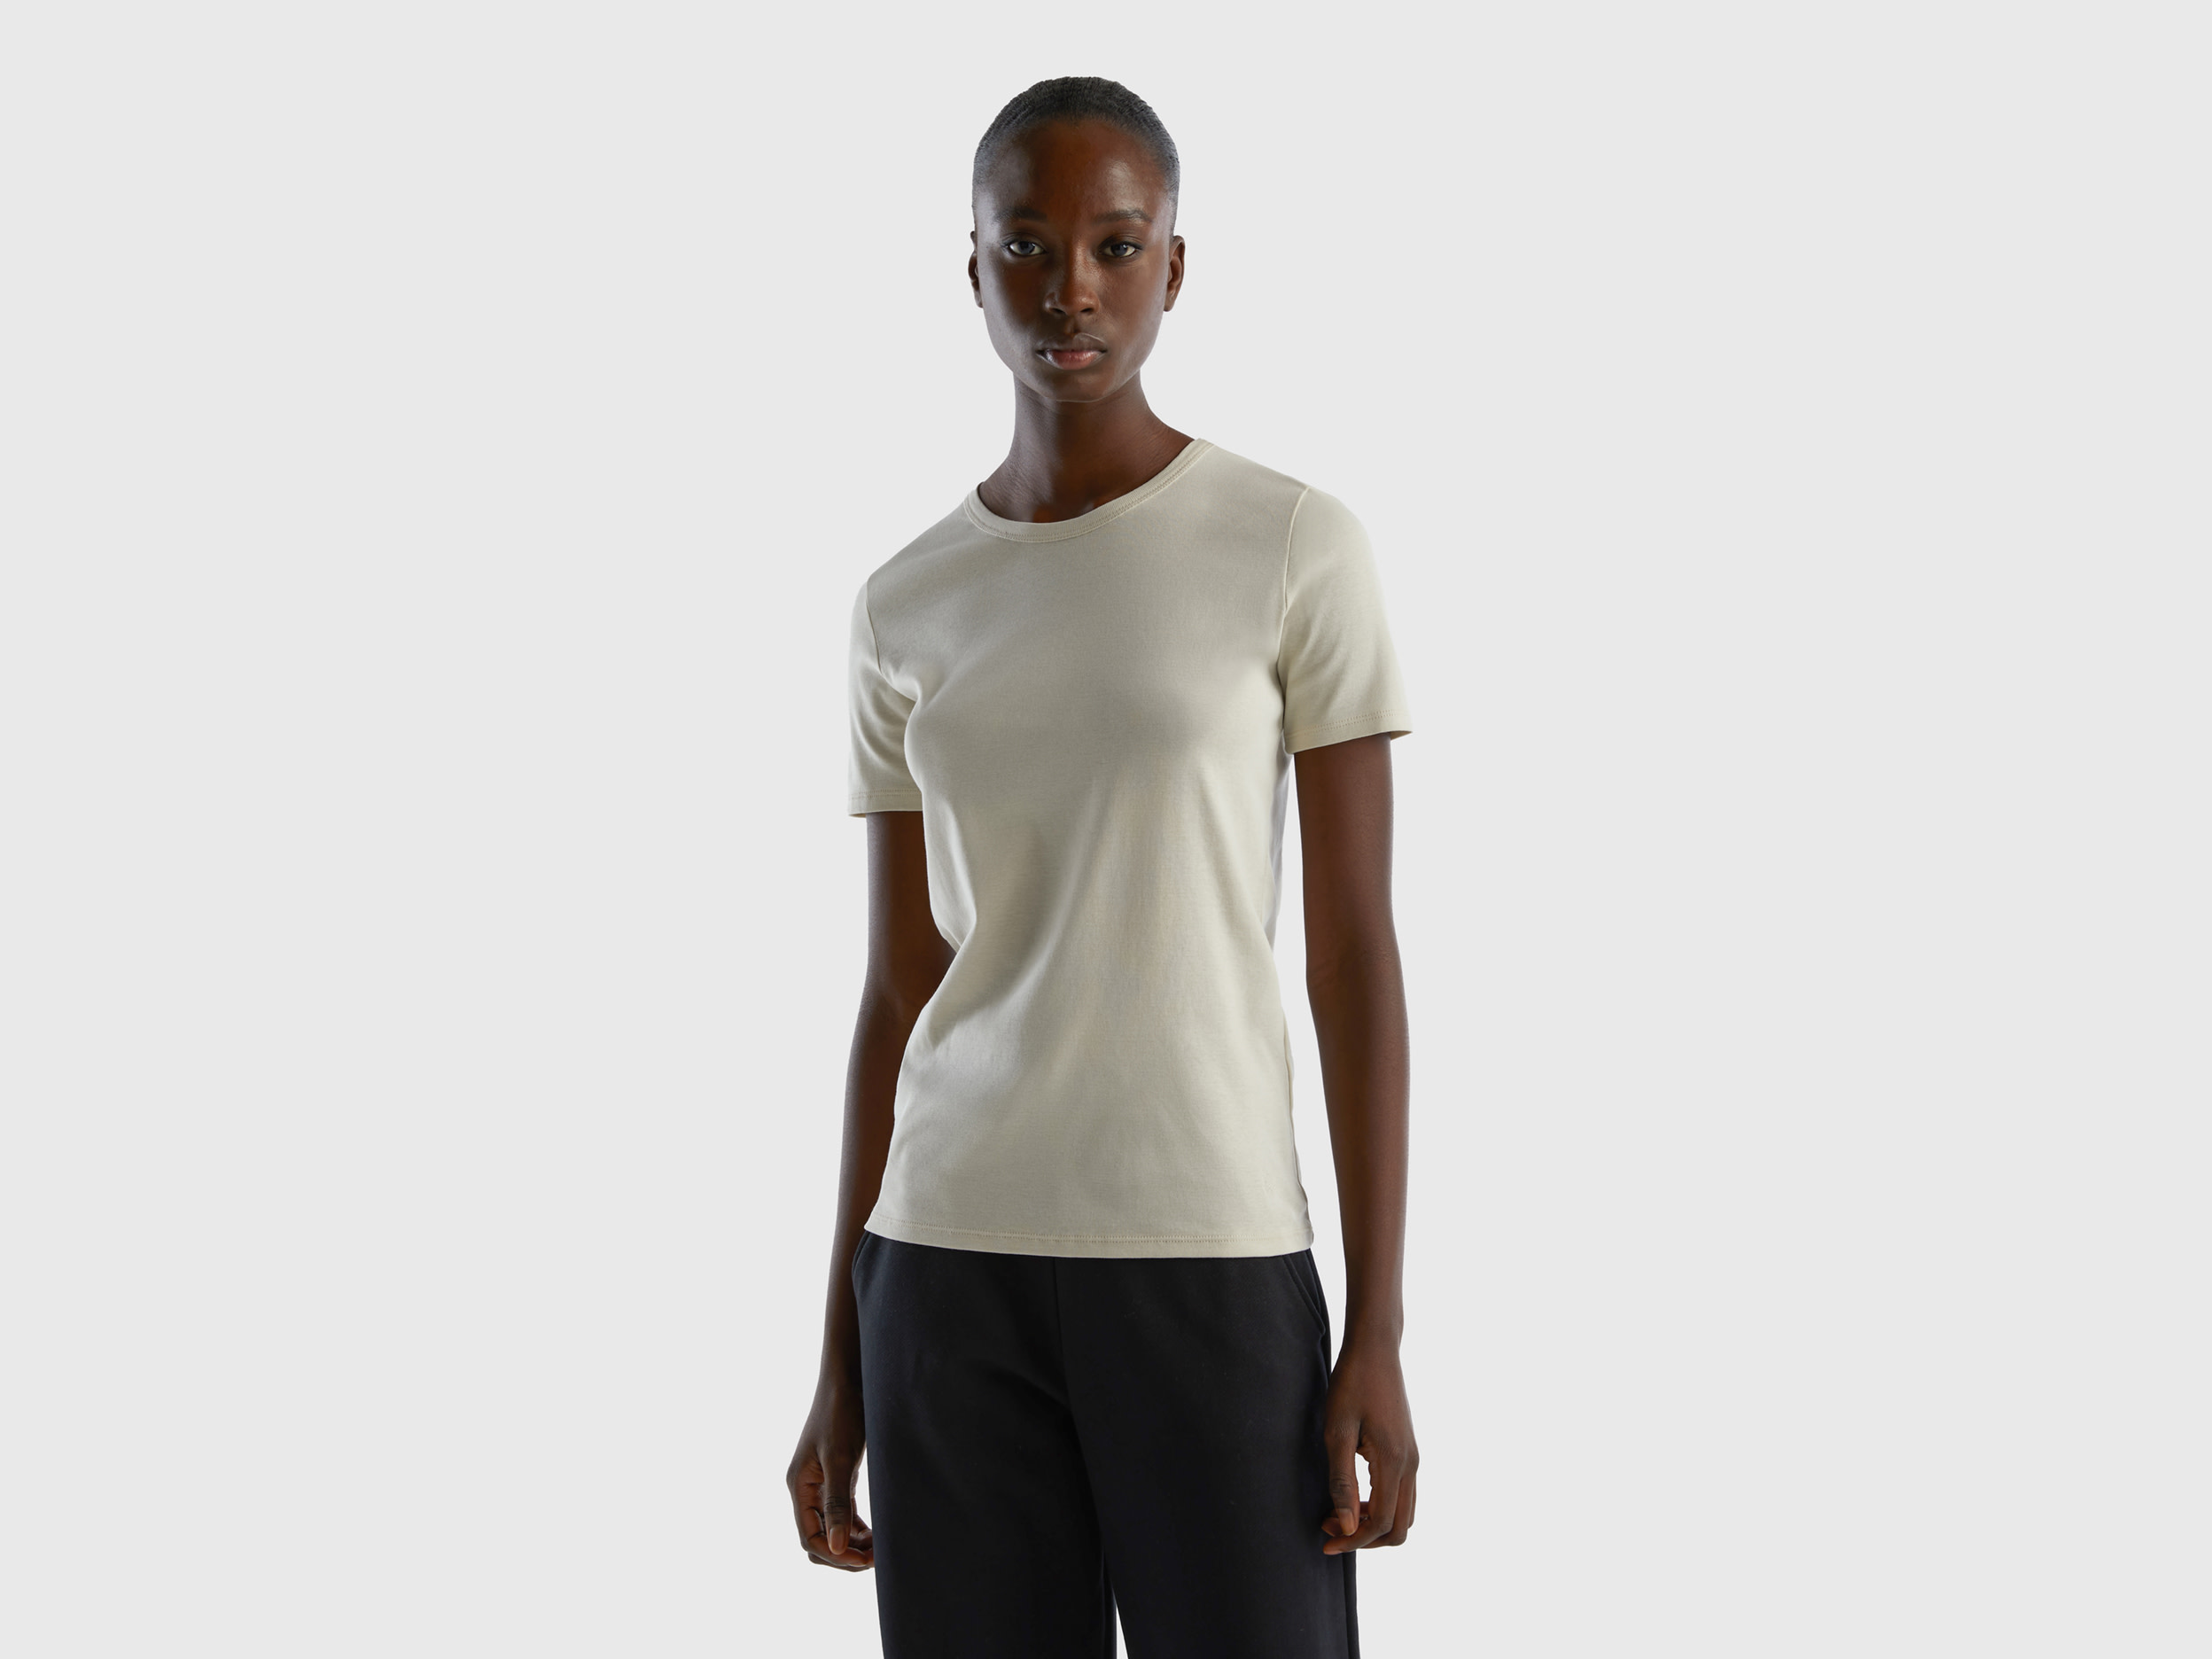 Benetton, Long Fiber Cotton T-shirt, size L, Beige, Women